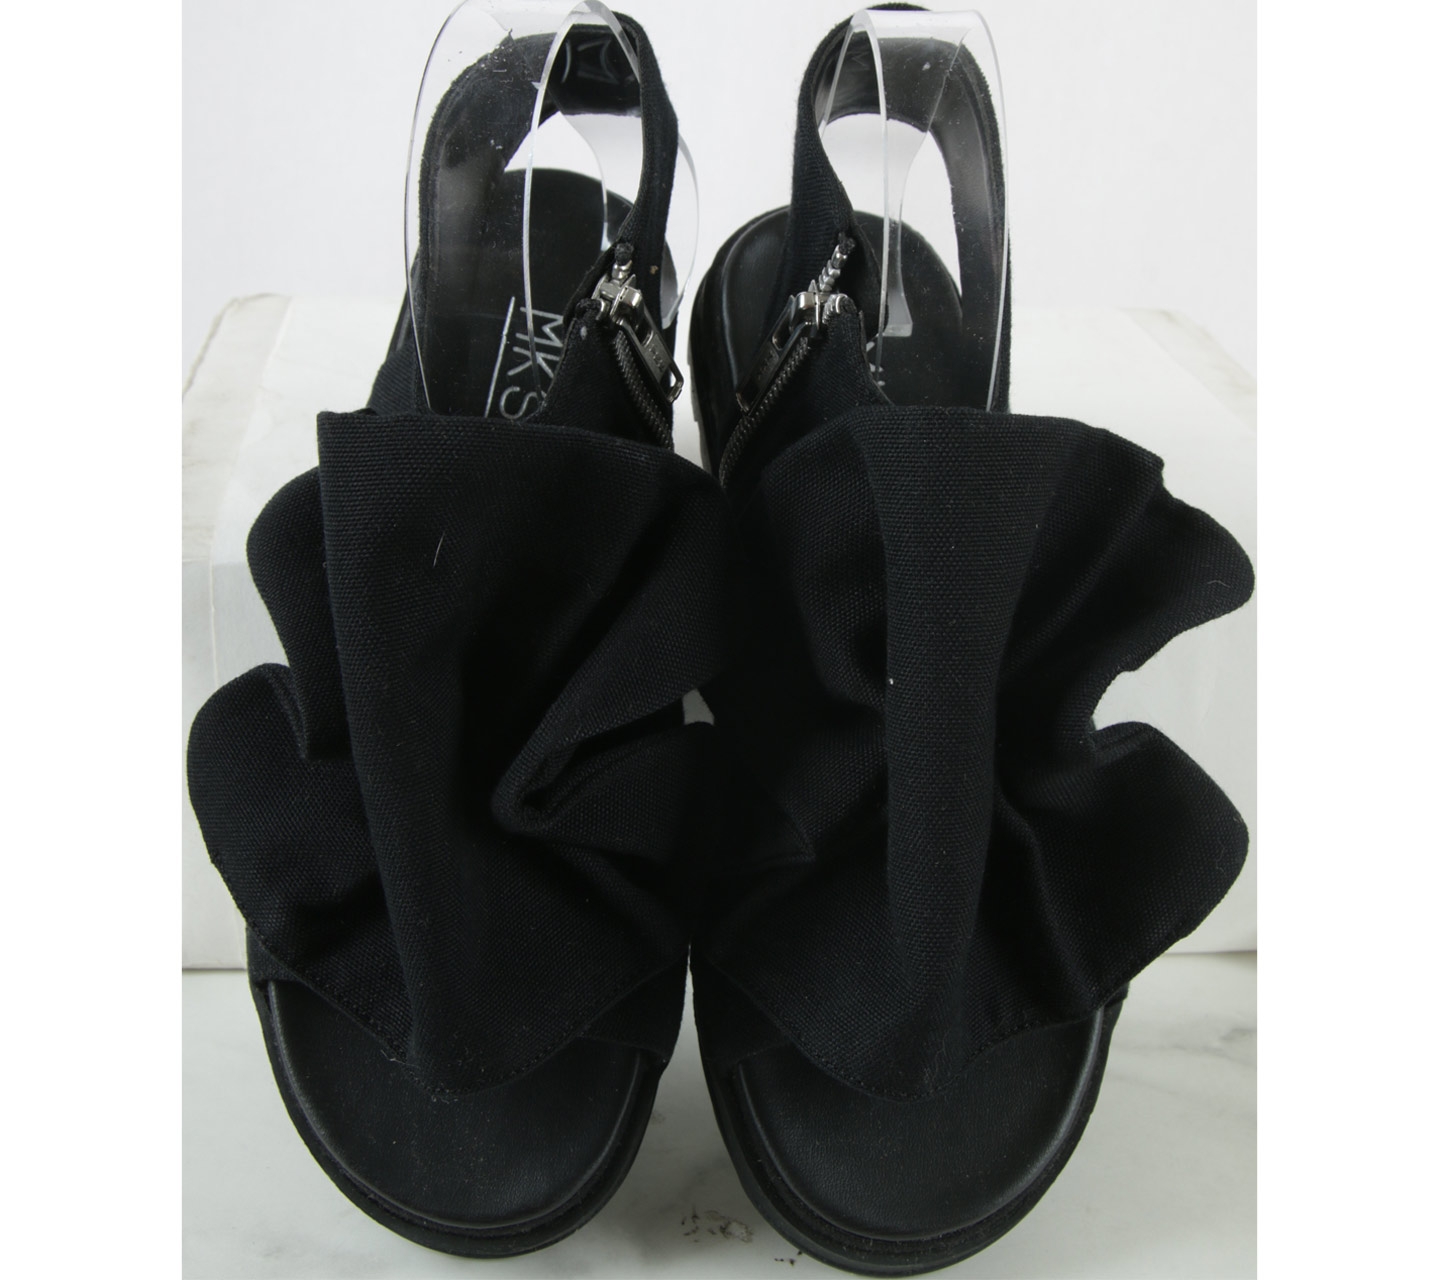 MKS' Black Sandals